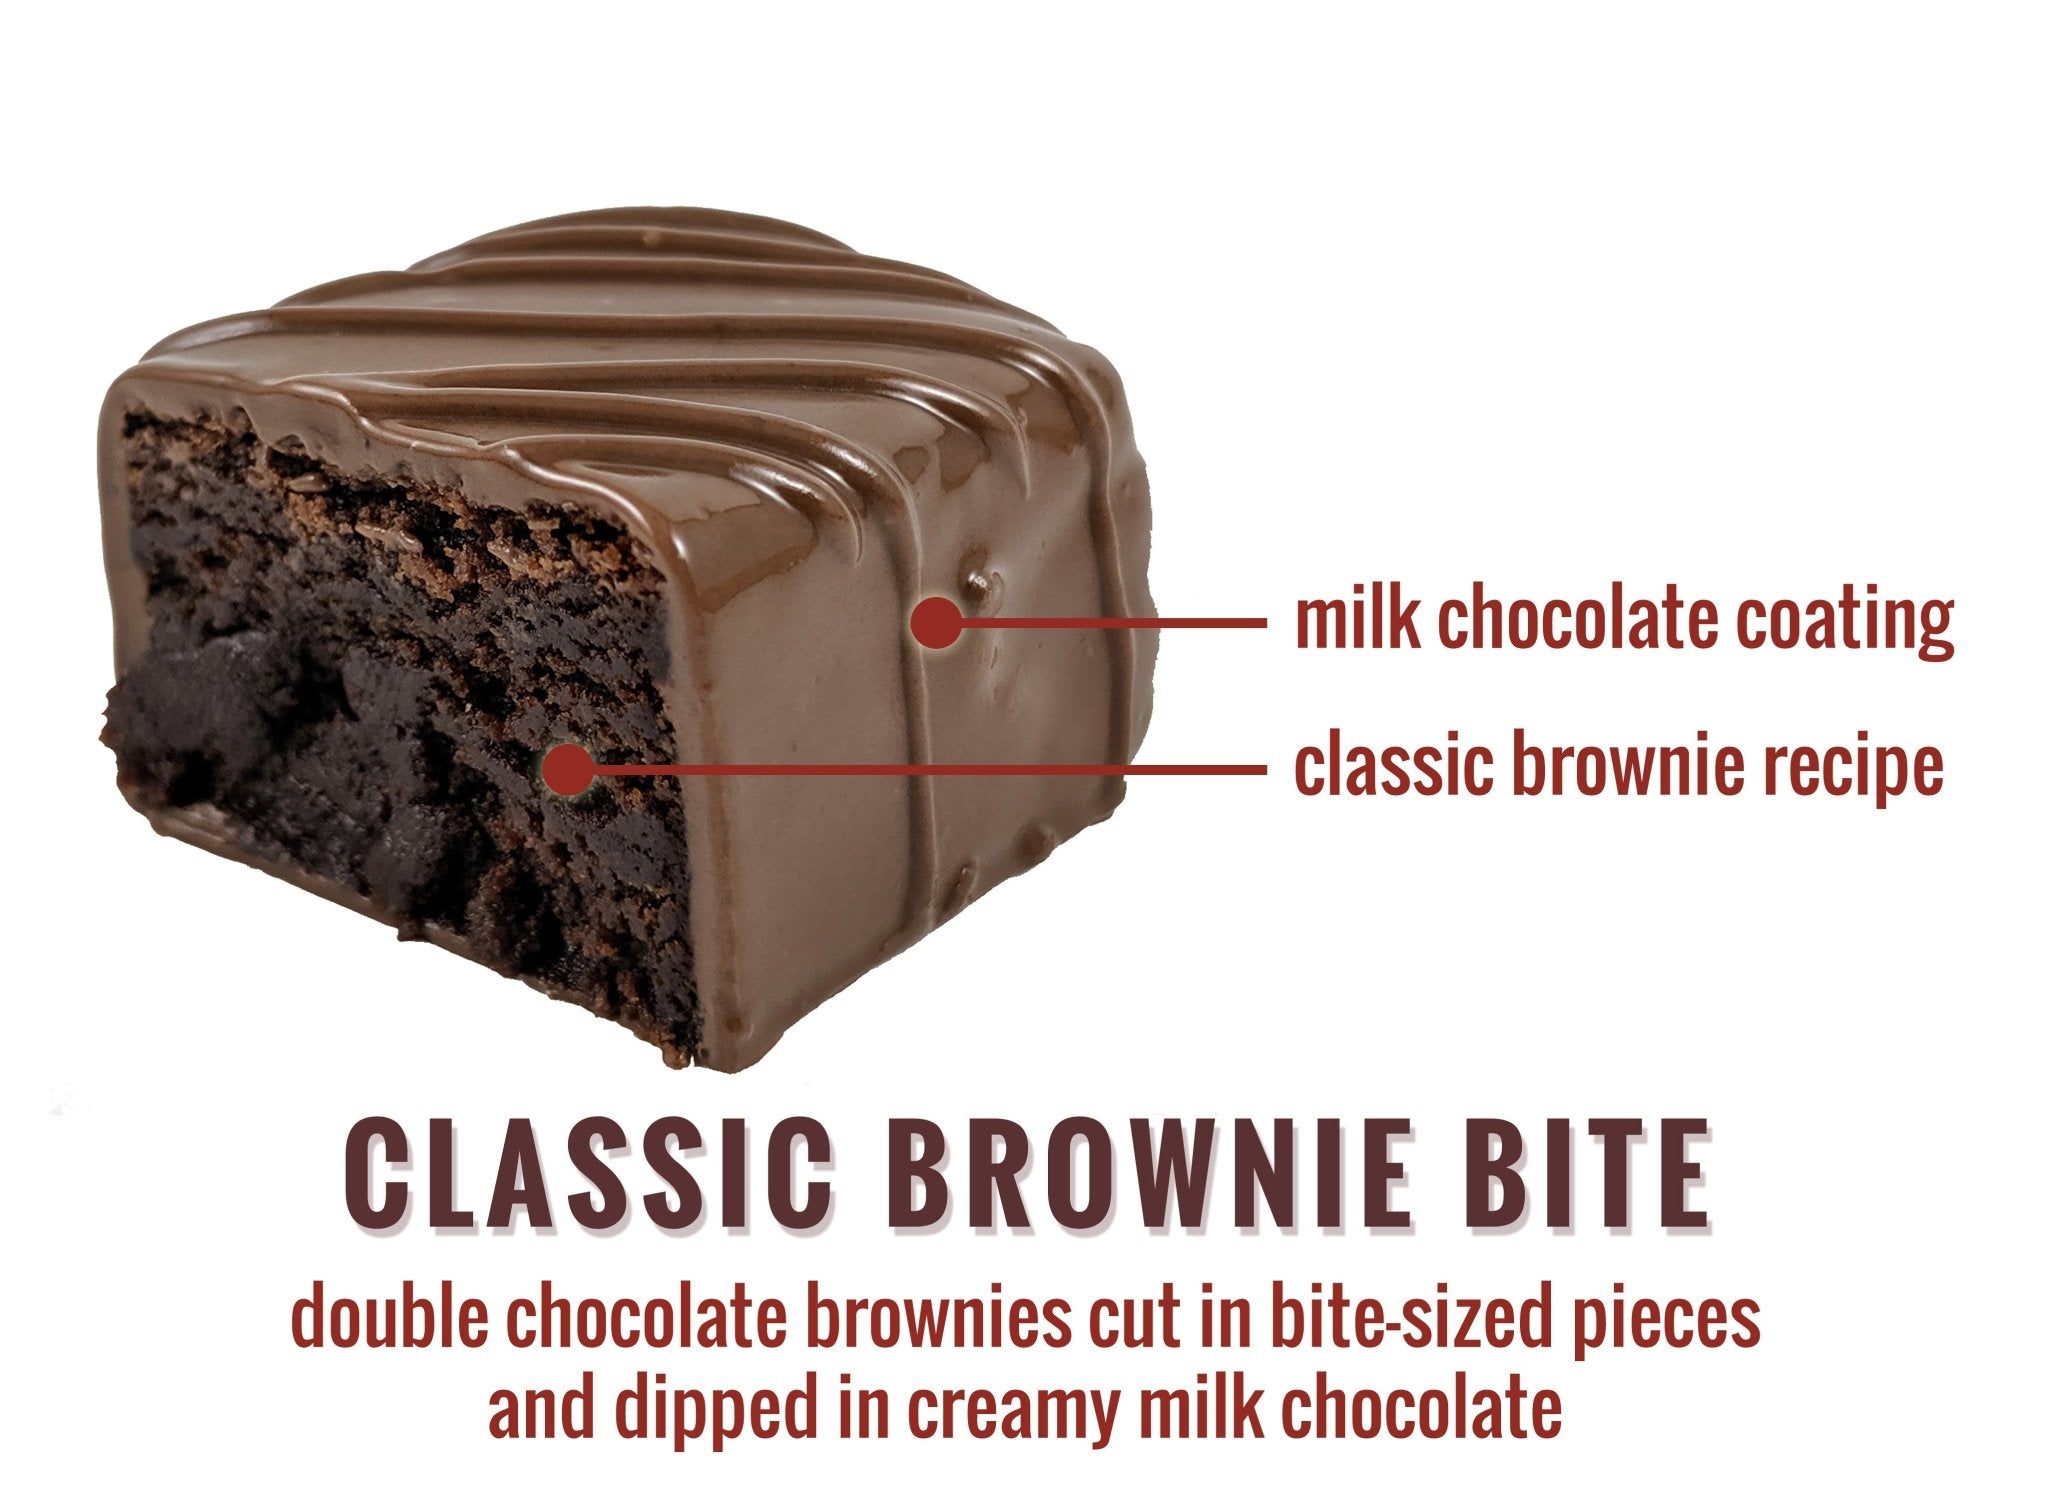 The Classic Assortment - 16 - Nettie's Craft Brownies